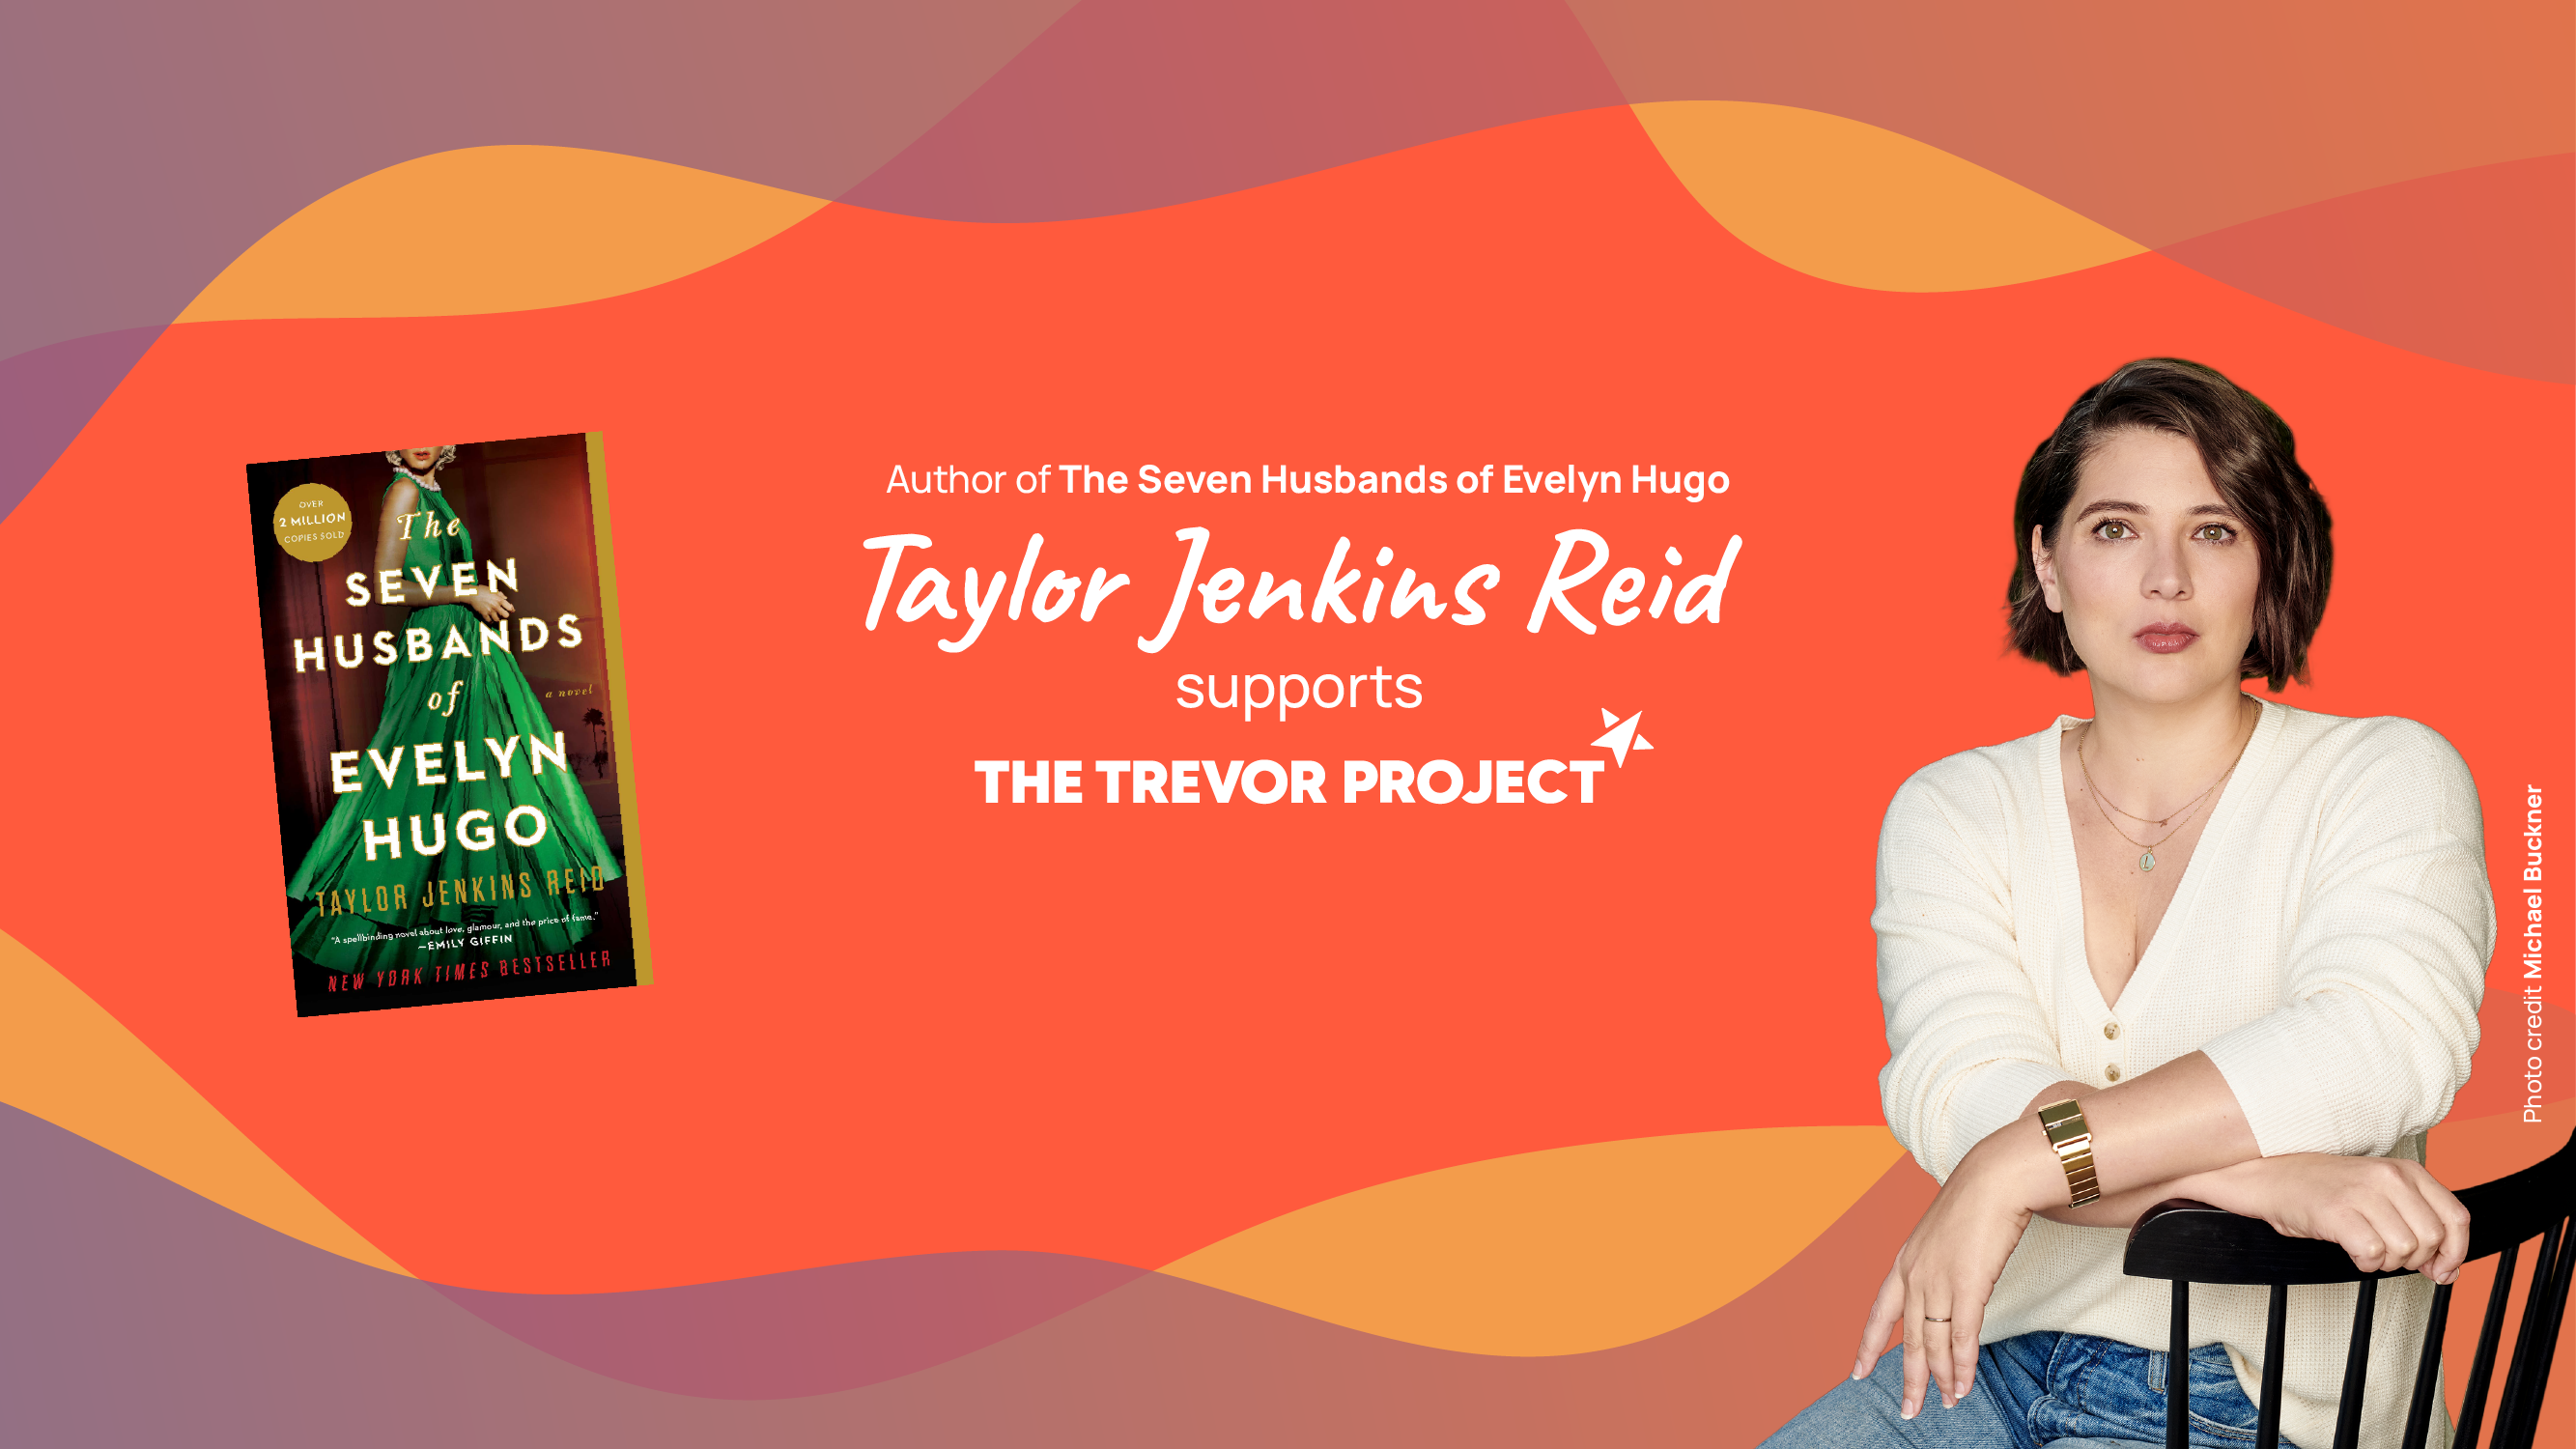 Taylor Jenkins Reid's Fundraiser - Campaign